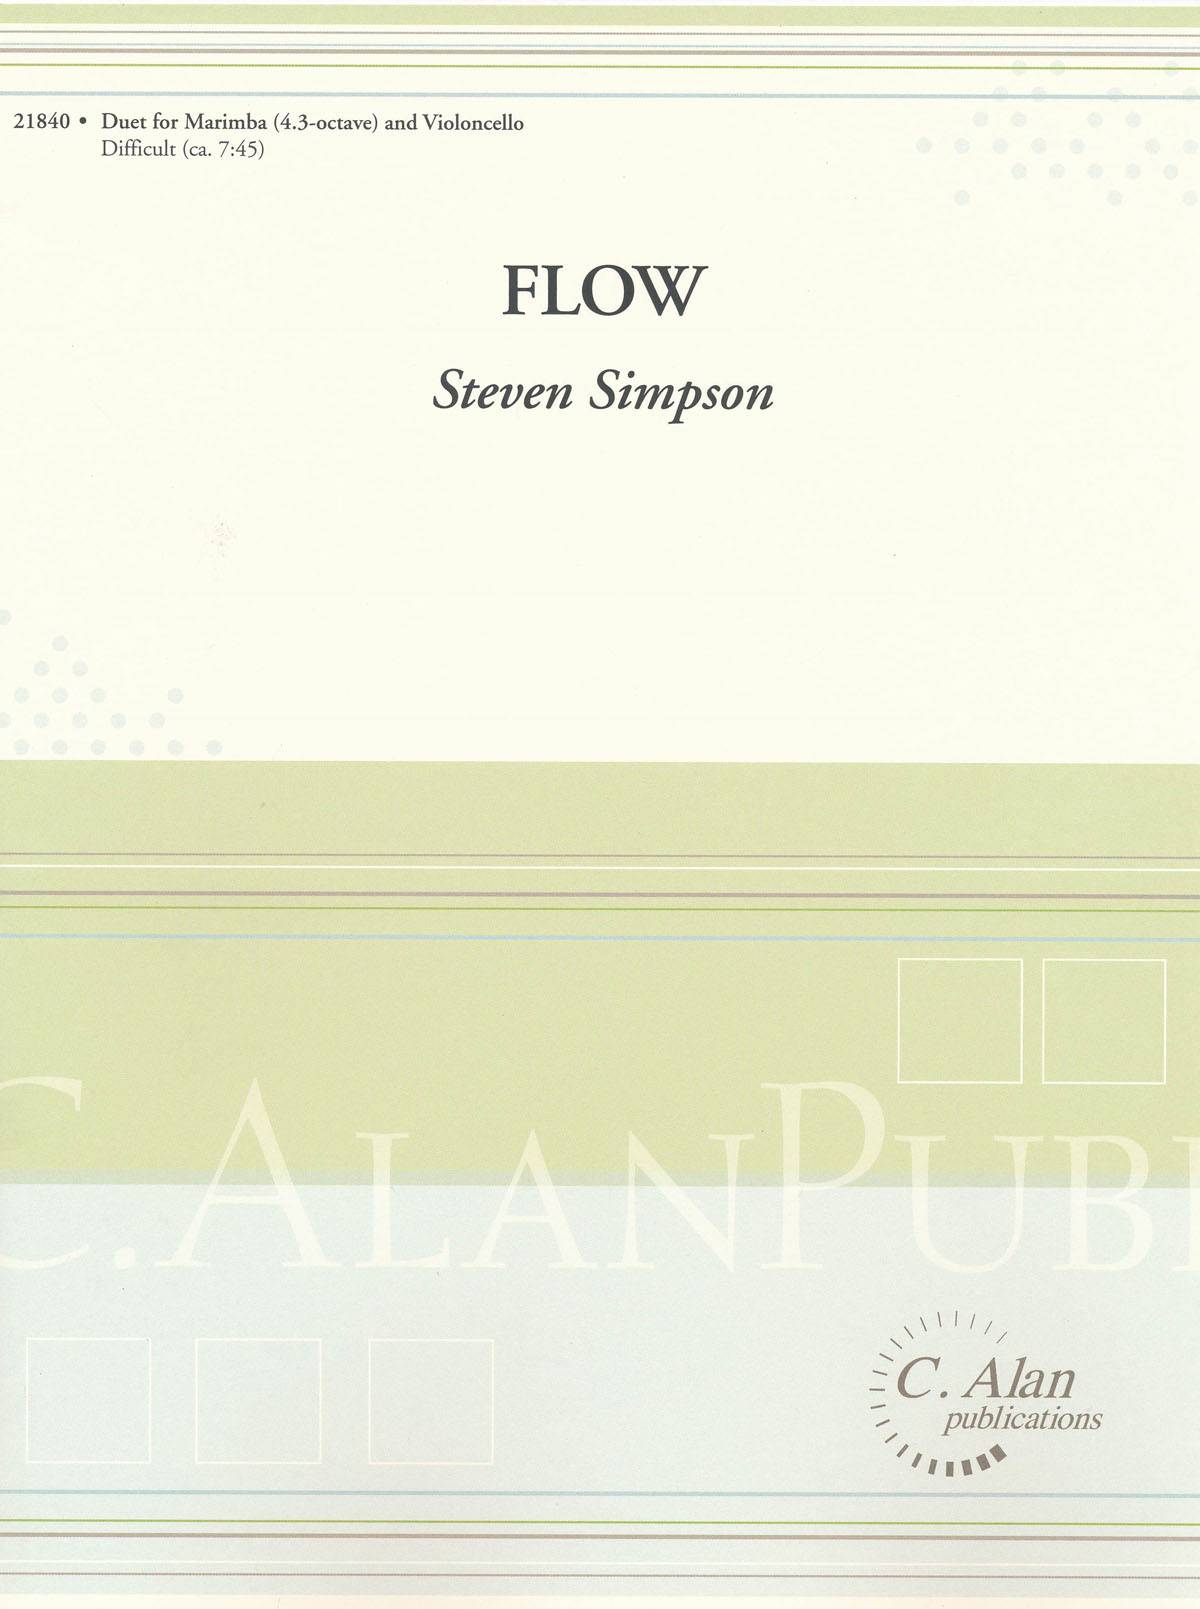 Flow by Steven Simpson